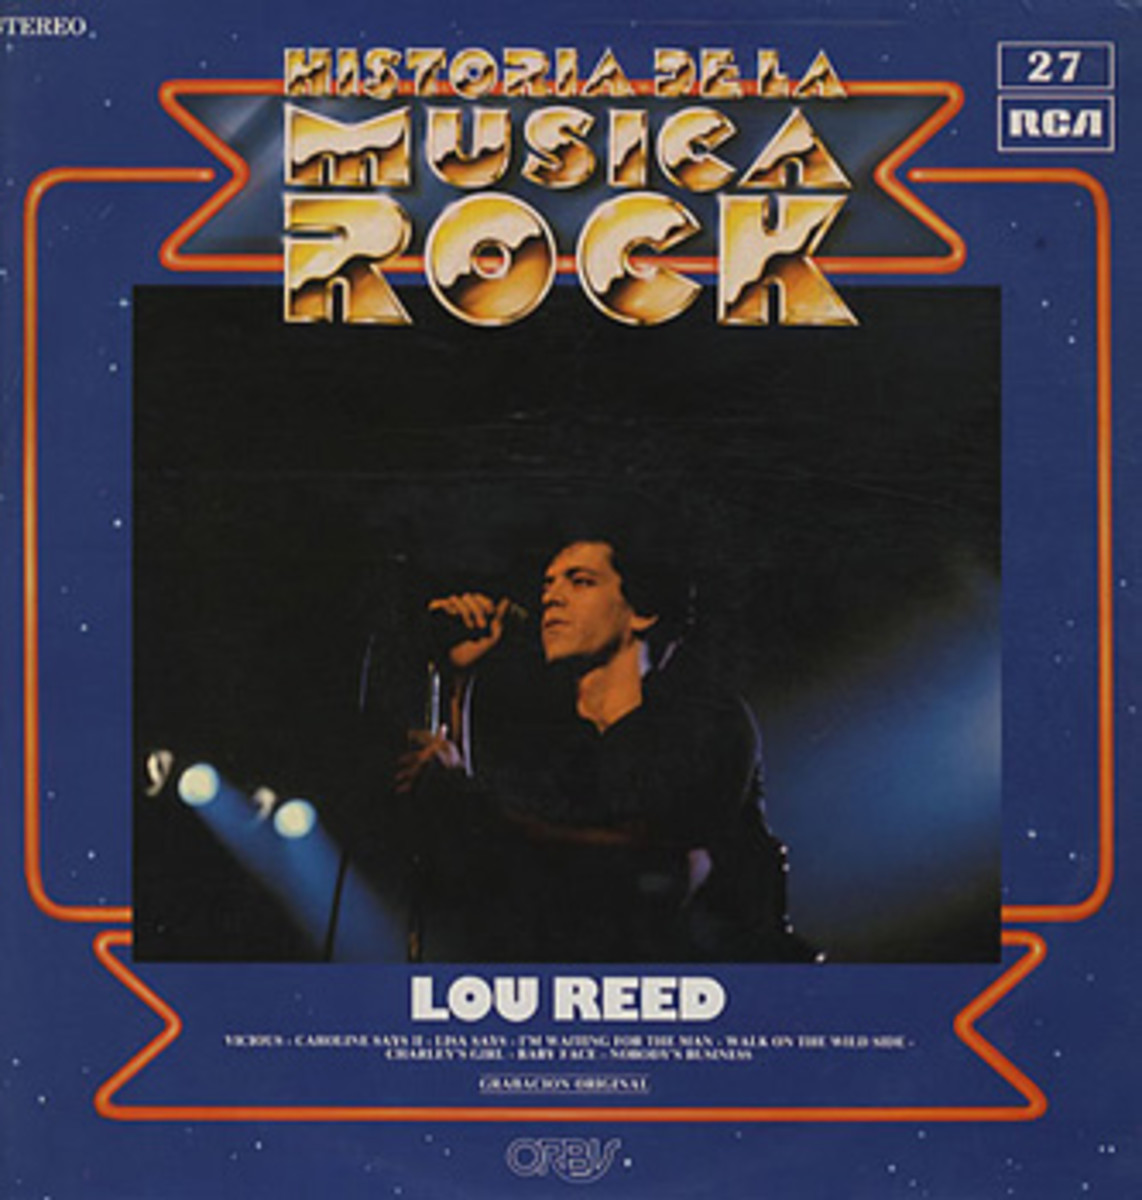 Historia De La Muscia Rock: Lou Reed album cover.